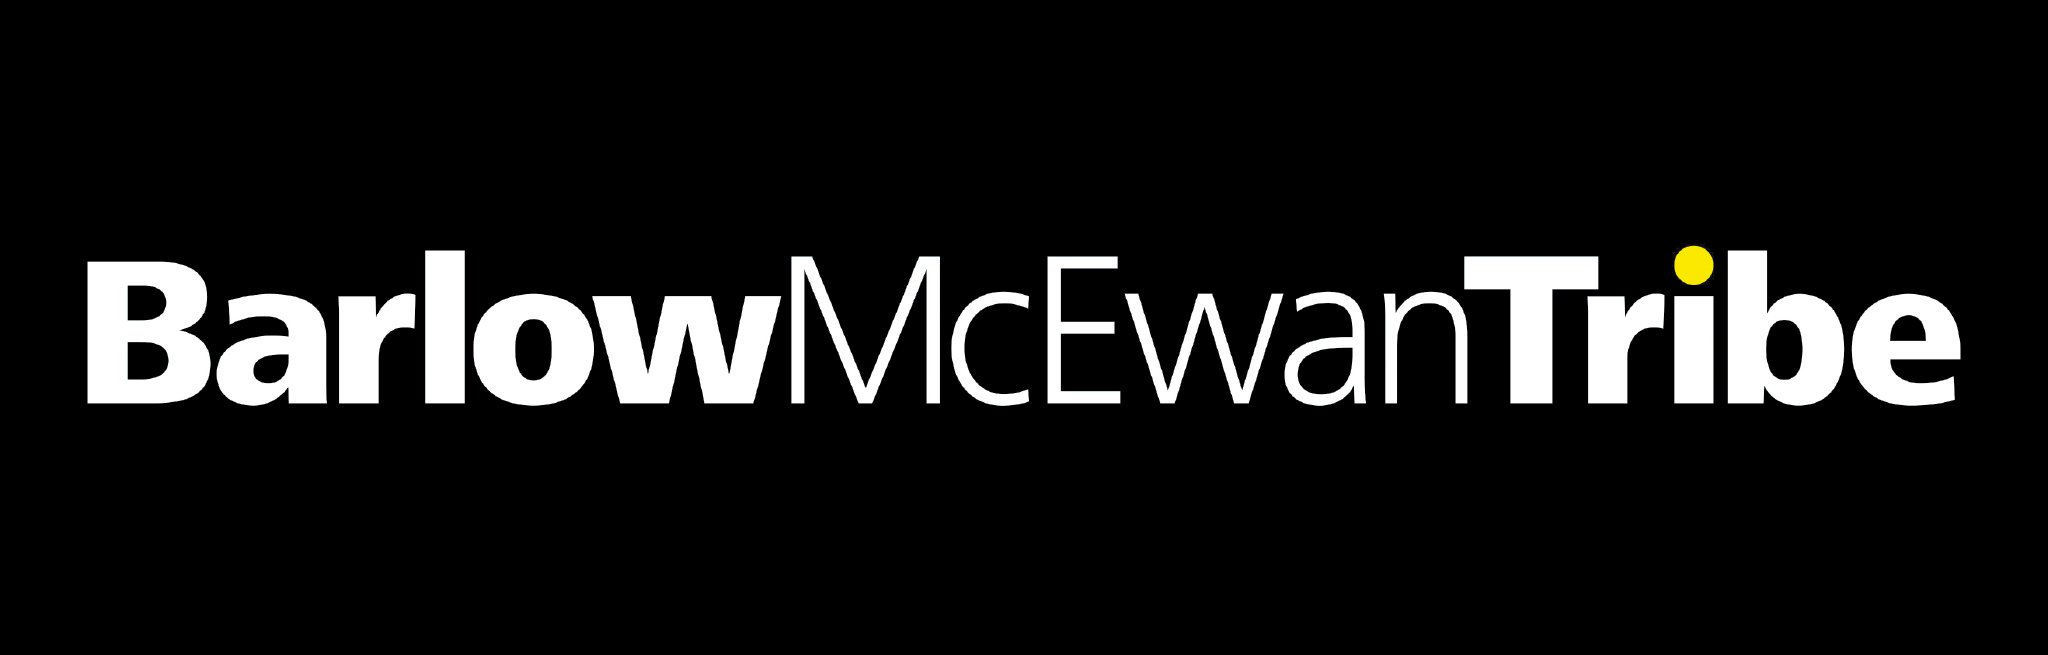 Barlow McEwan Tribe Logo